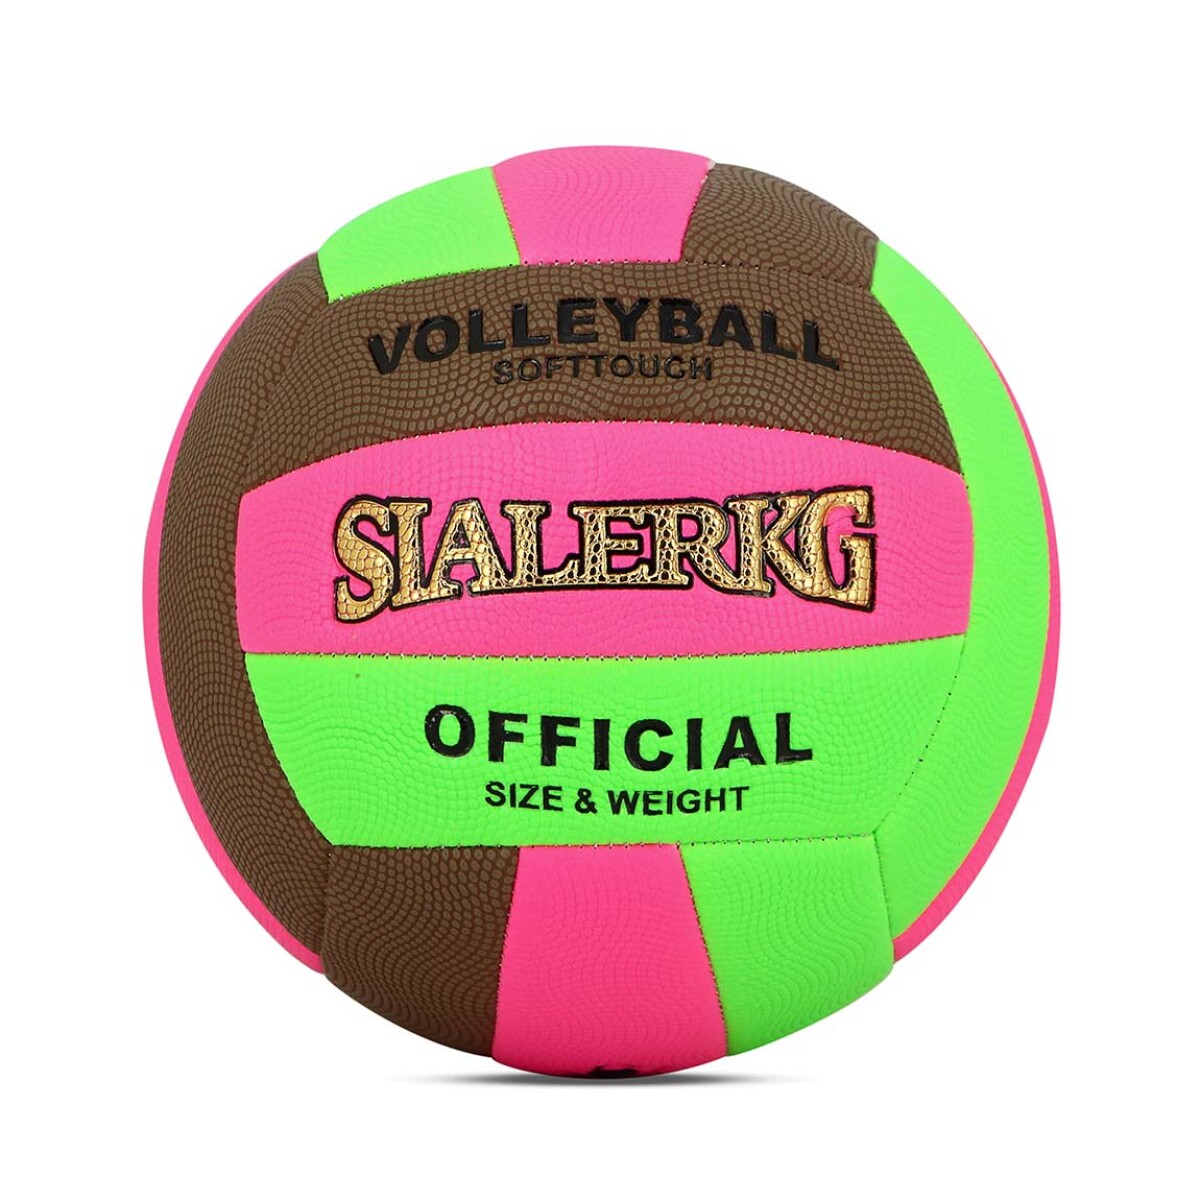 Macri Pelota Volleyball - 8 - Multicolor 